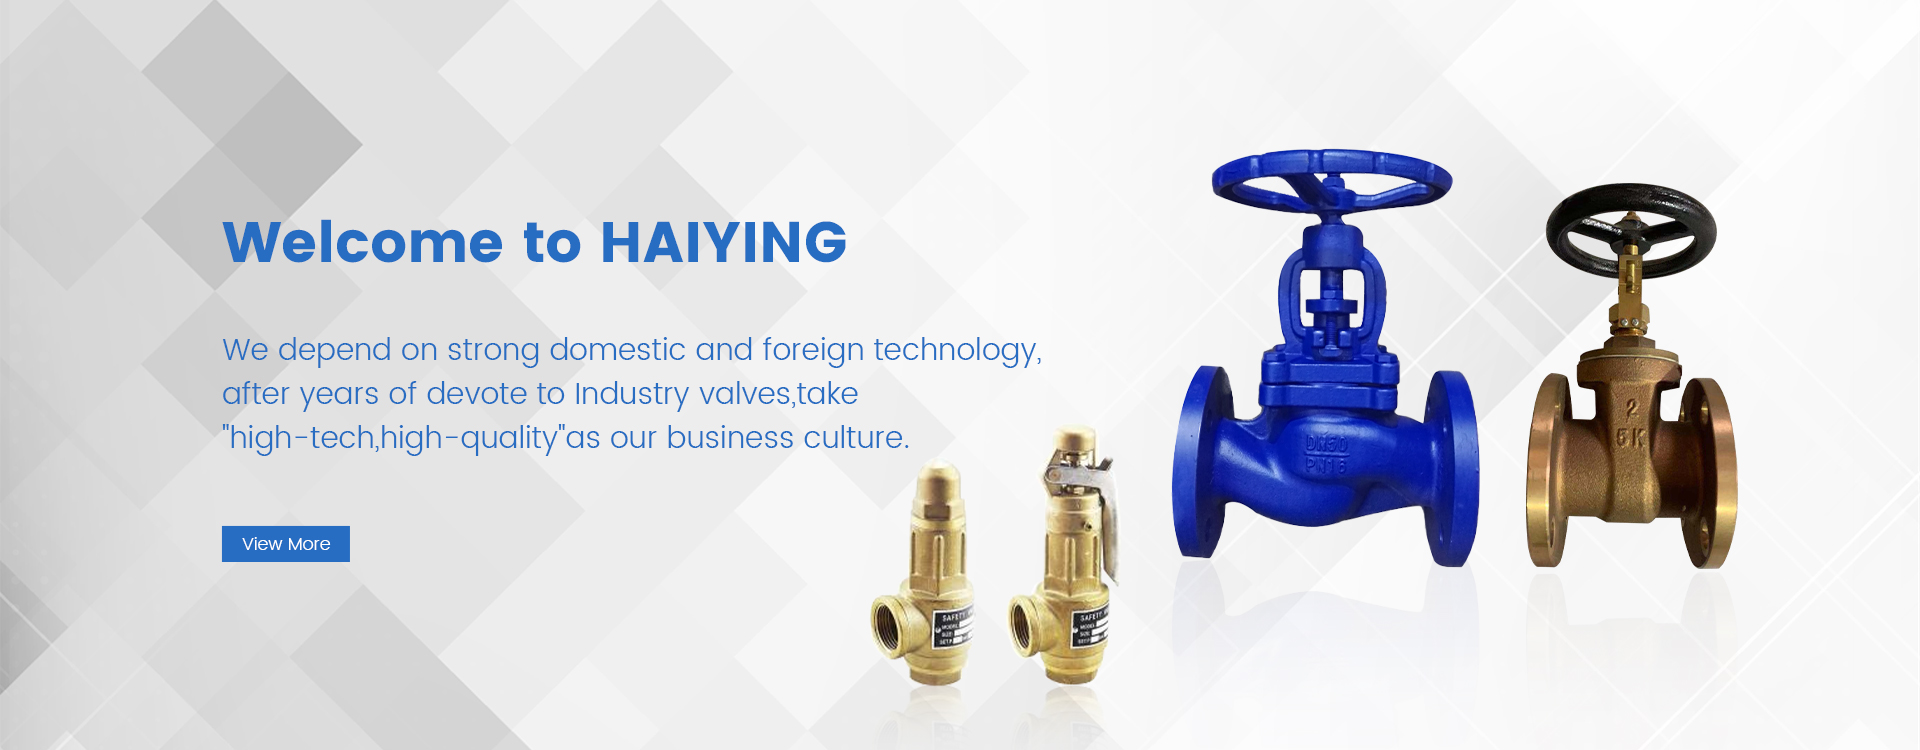 China marine valve manufacturers company